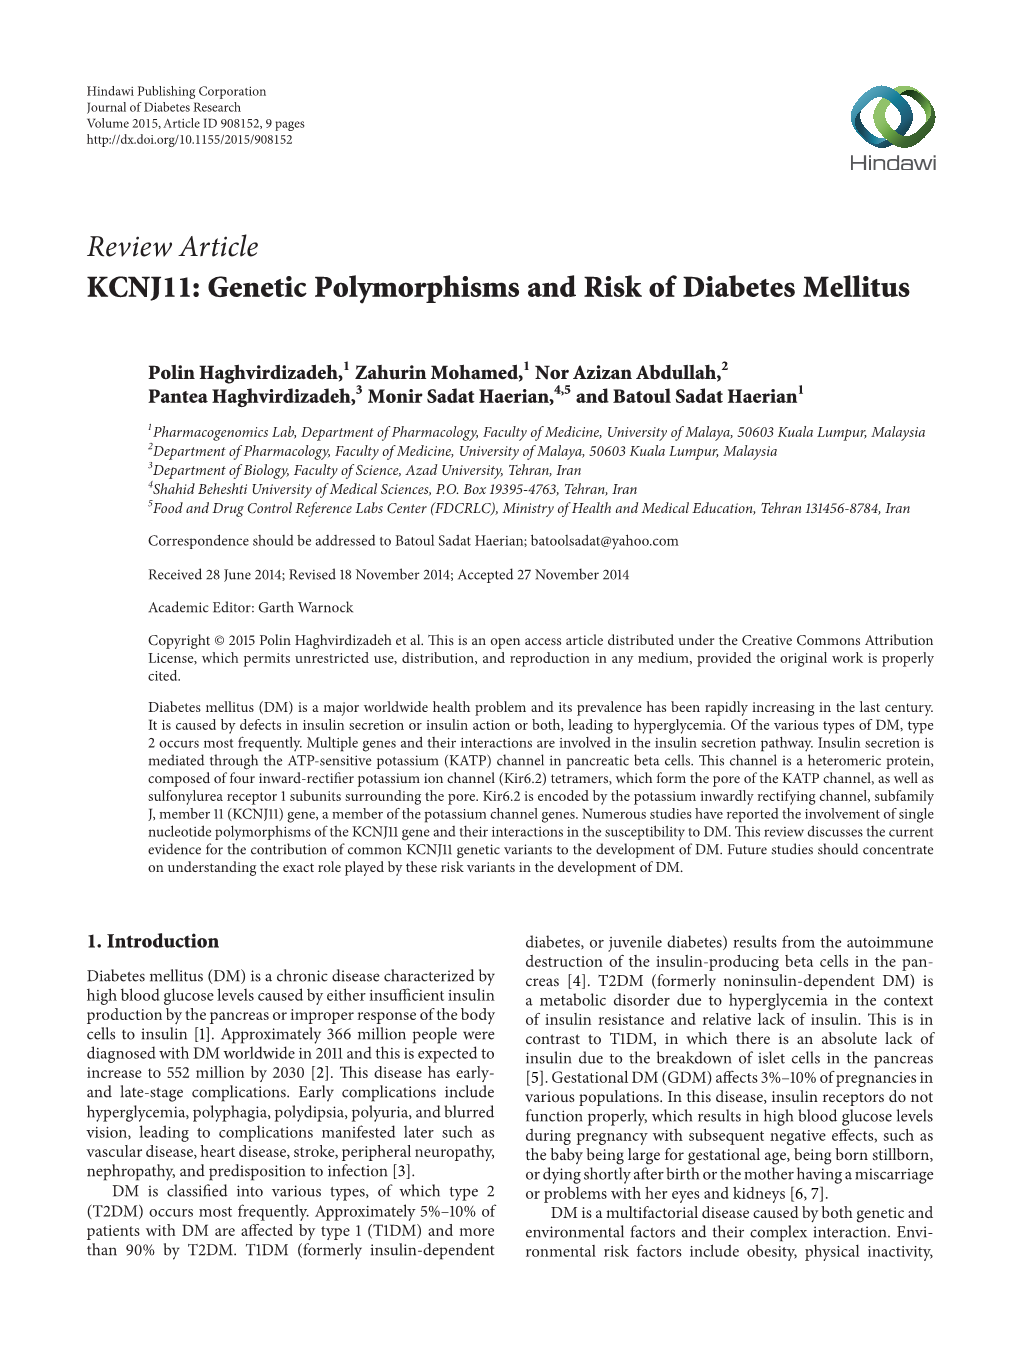 KCNJ11: Genetic Polymorphisms and Risk of Diabetes Mellitus